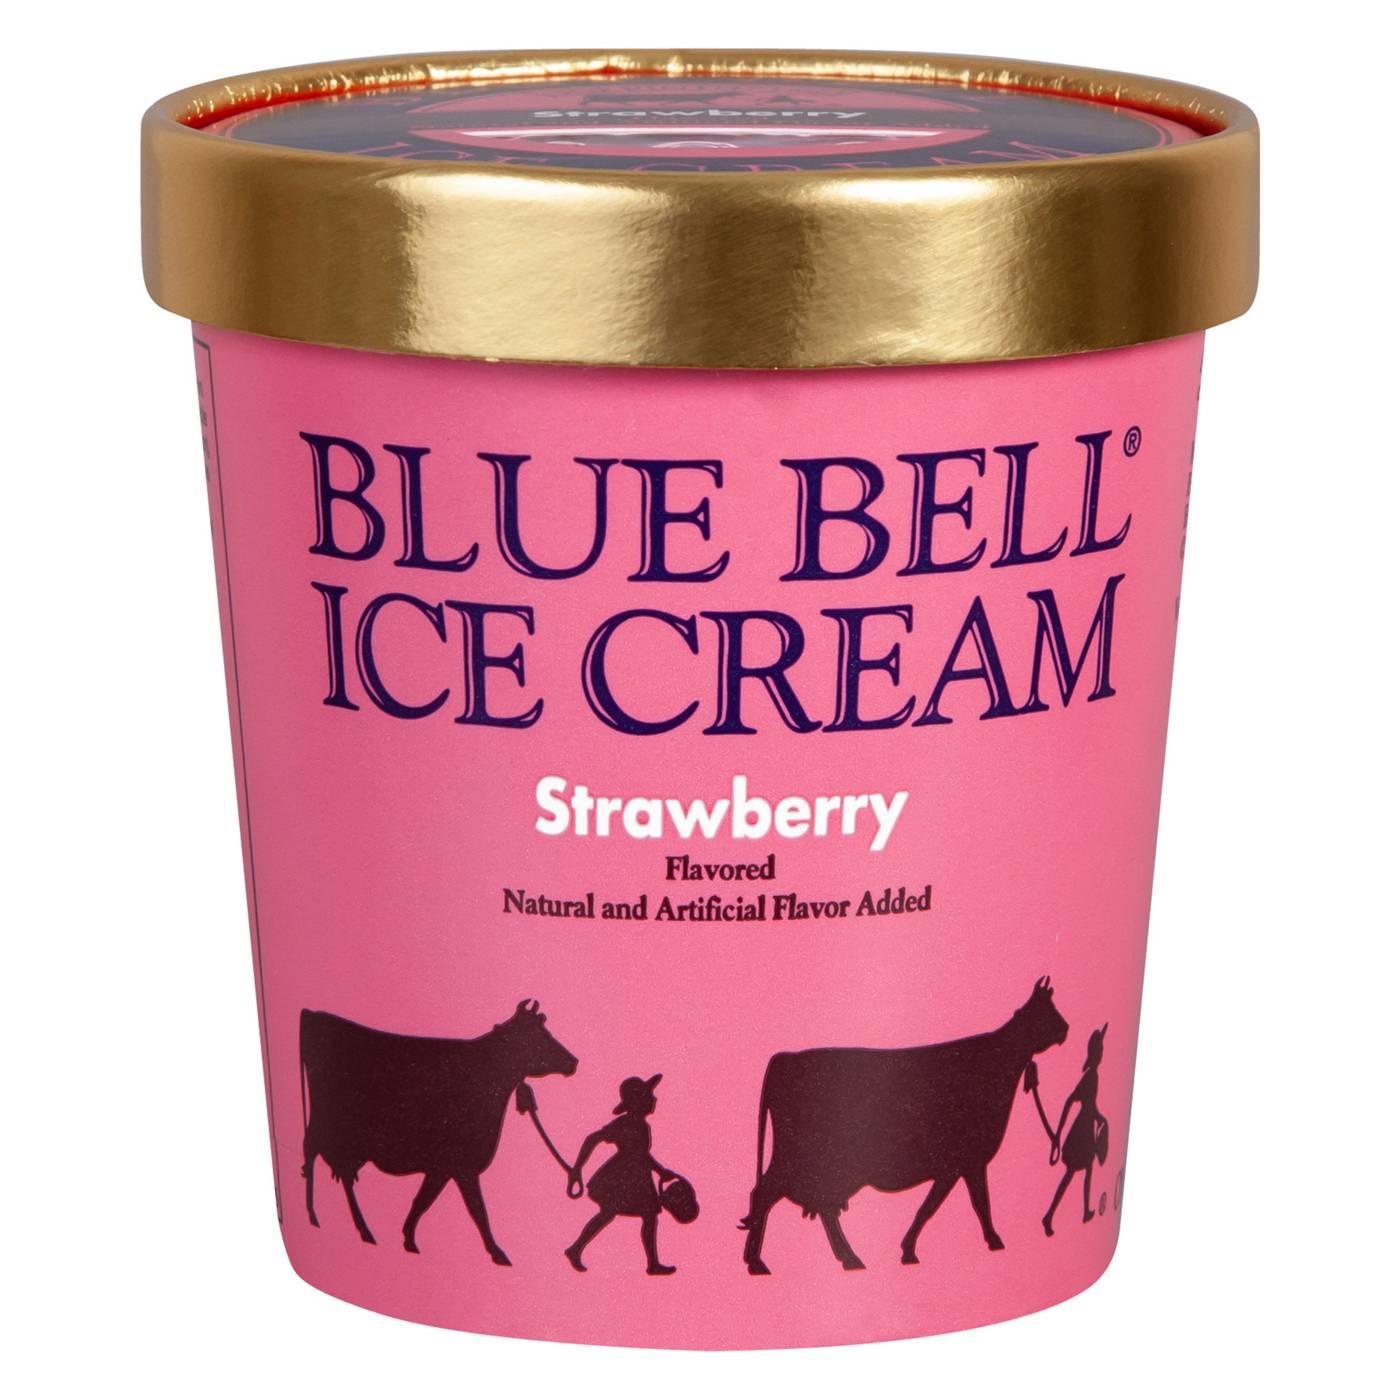 Blue Bell Strawberry Ice Cream; image 1 of 2